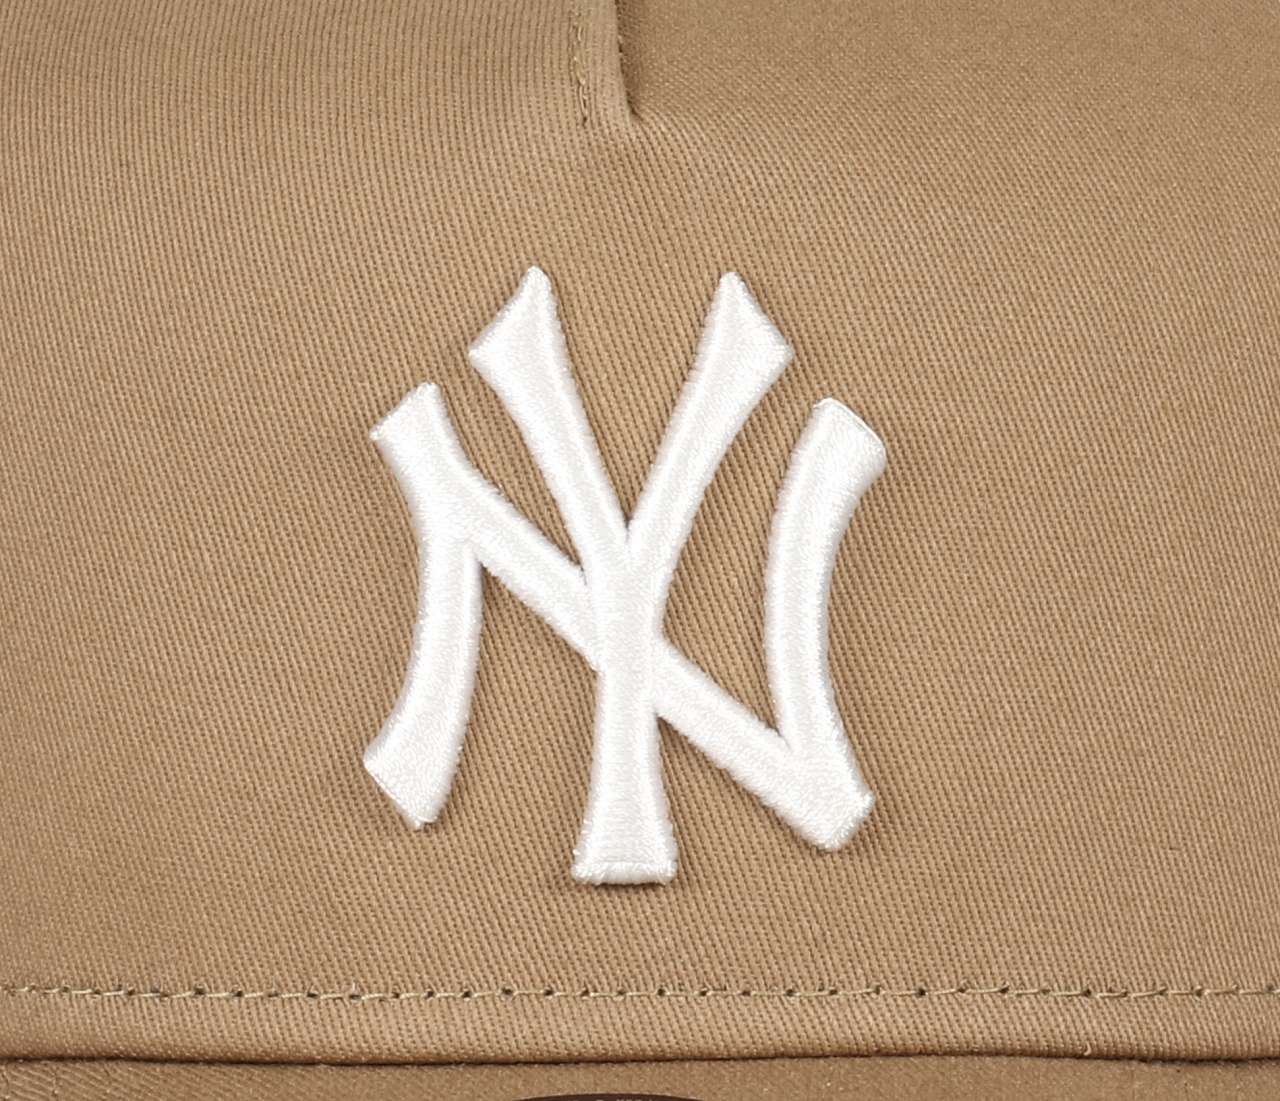 New York Yankees MLB Khaki 9Forty A-Frame Snapback Cap New Era